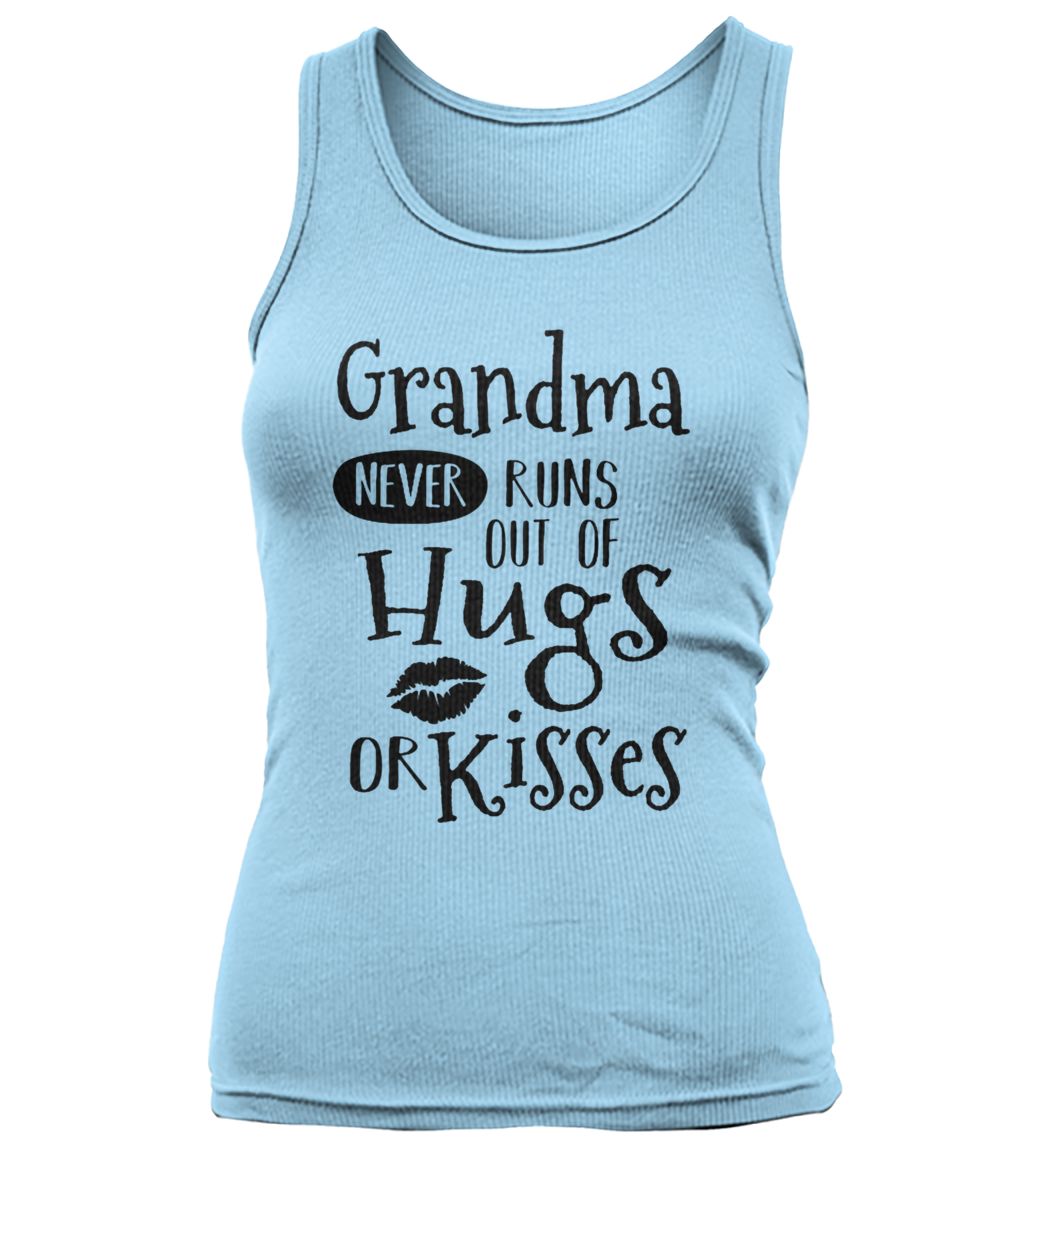 Grandma never runs out of hugs and kisses women's tank top